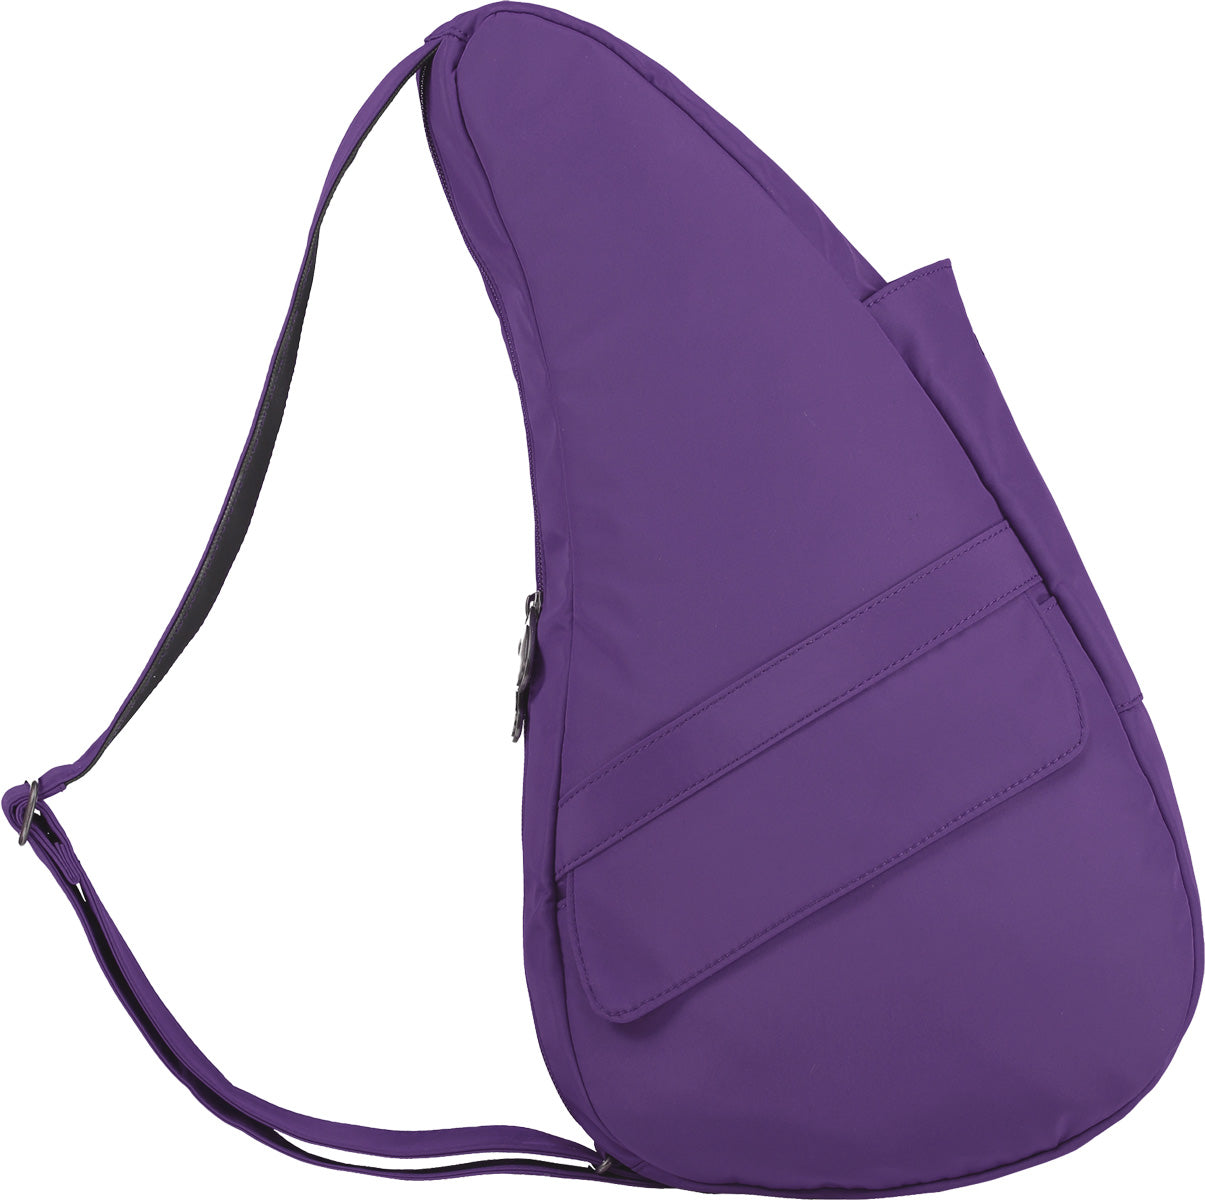 AmeriBag Healthy Back Bag tote Microfiber Small (Wild Violet)